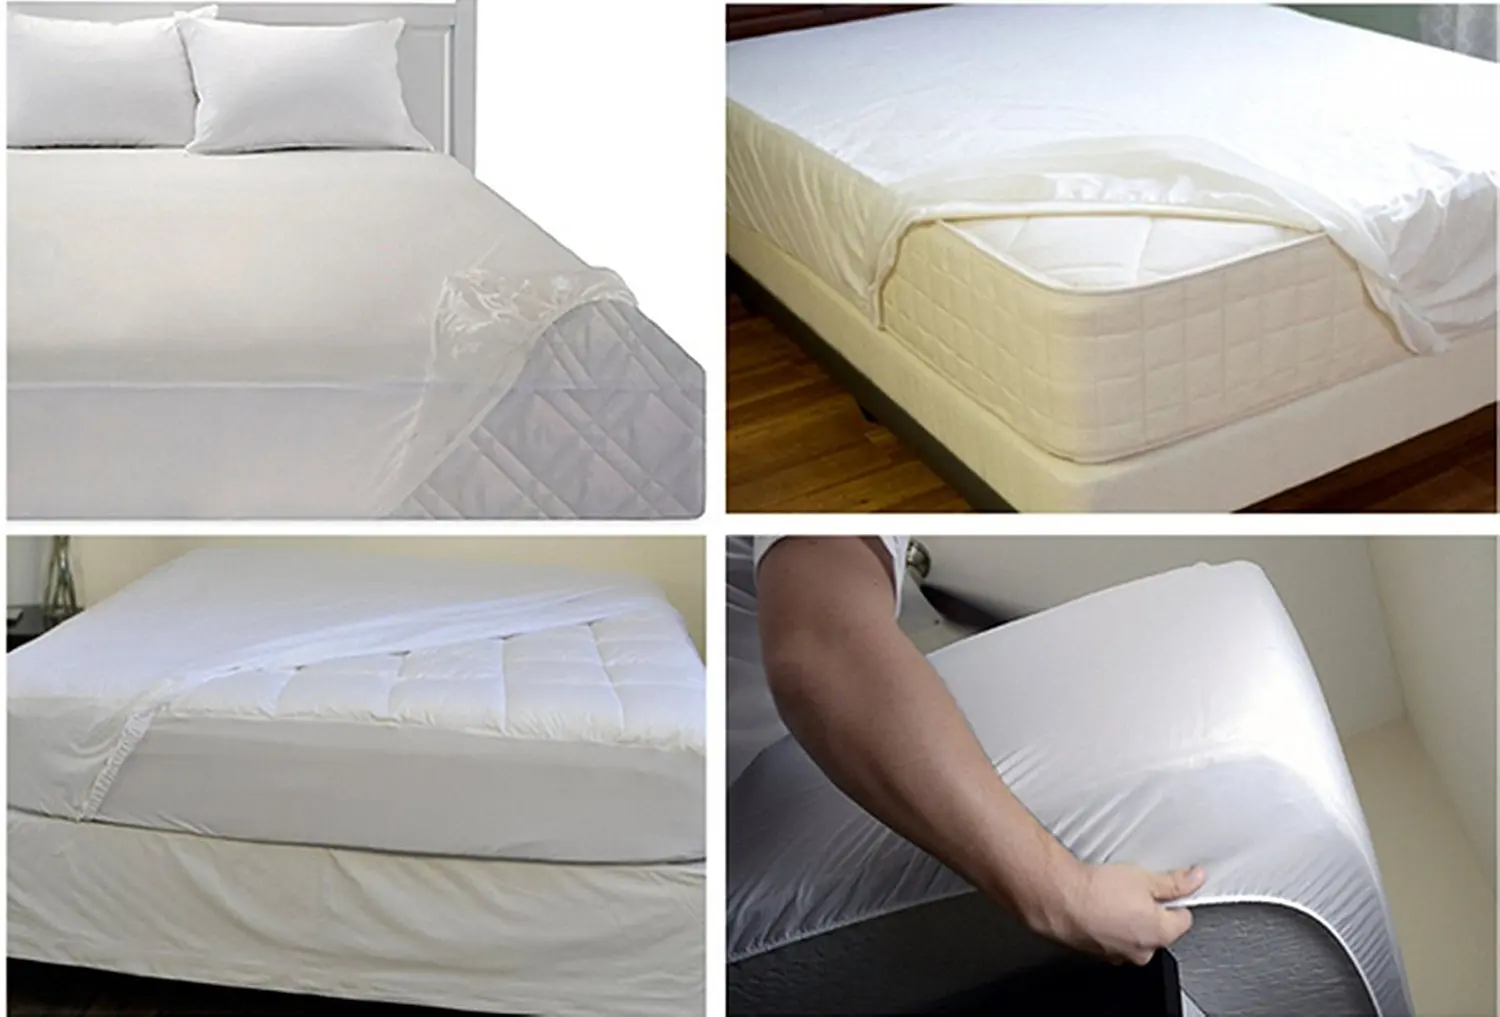 plastic queen size mattress covers